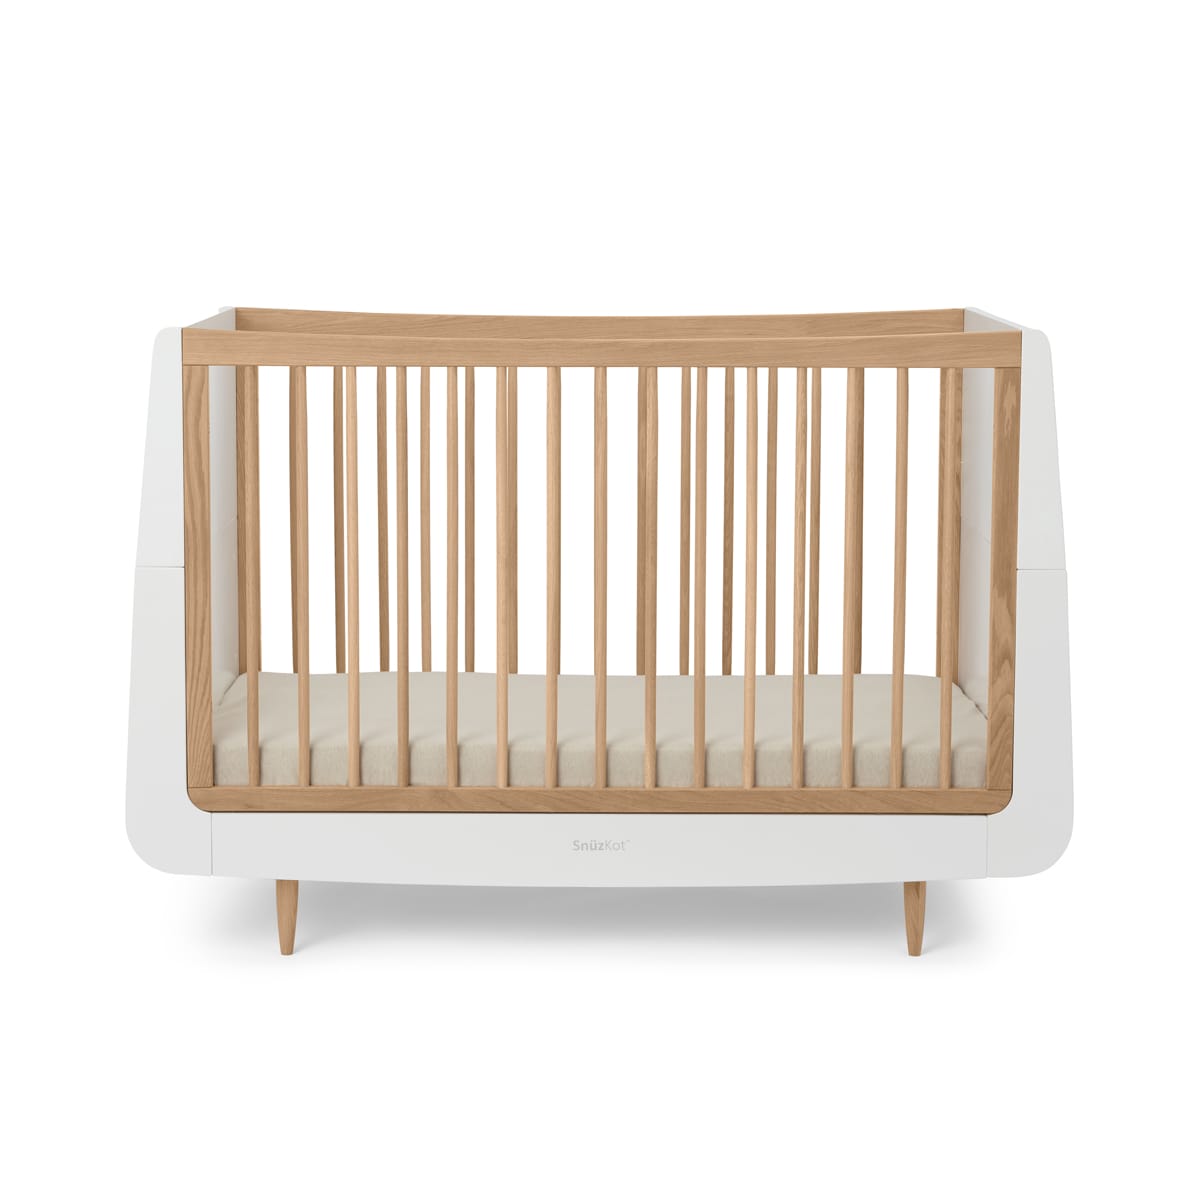 SnuzKot Skandi 3 Piece Nursery Furniture Set The Natural Edit “Oak